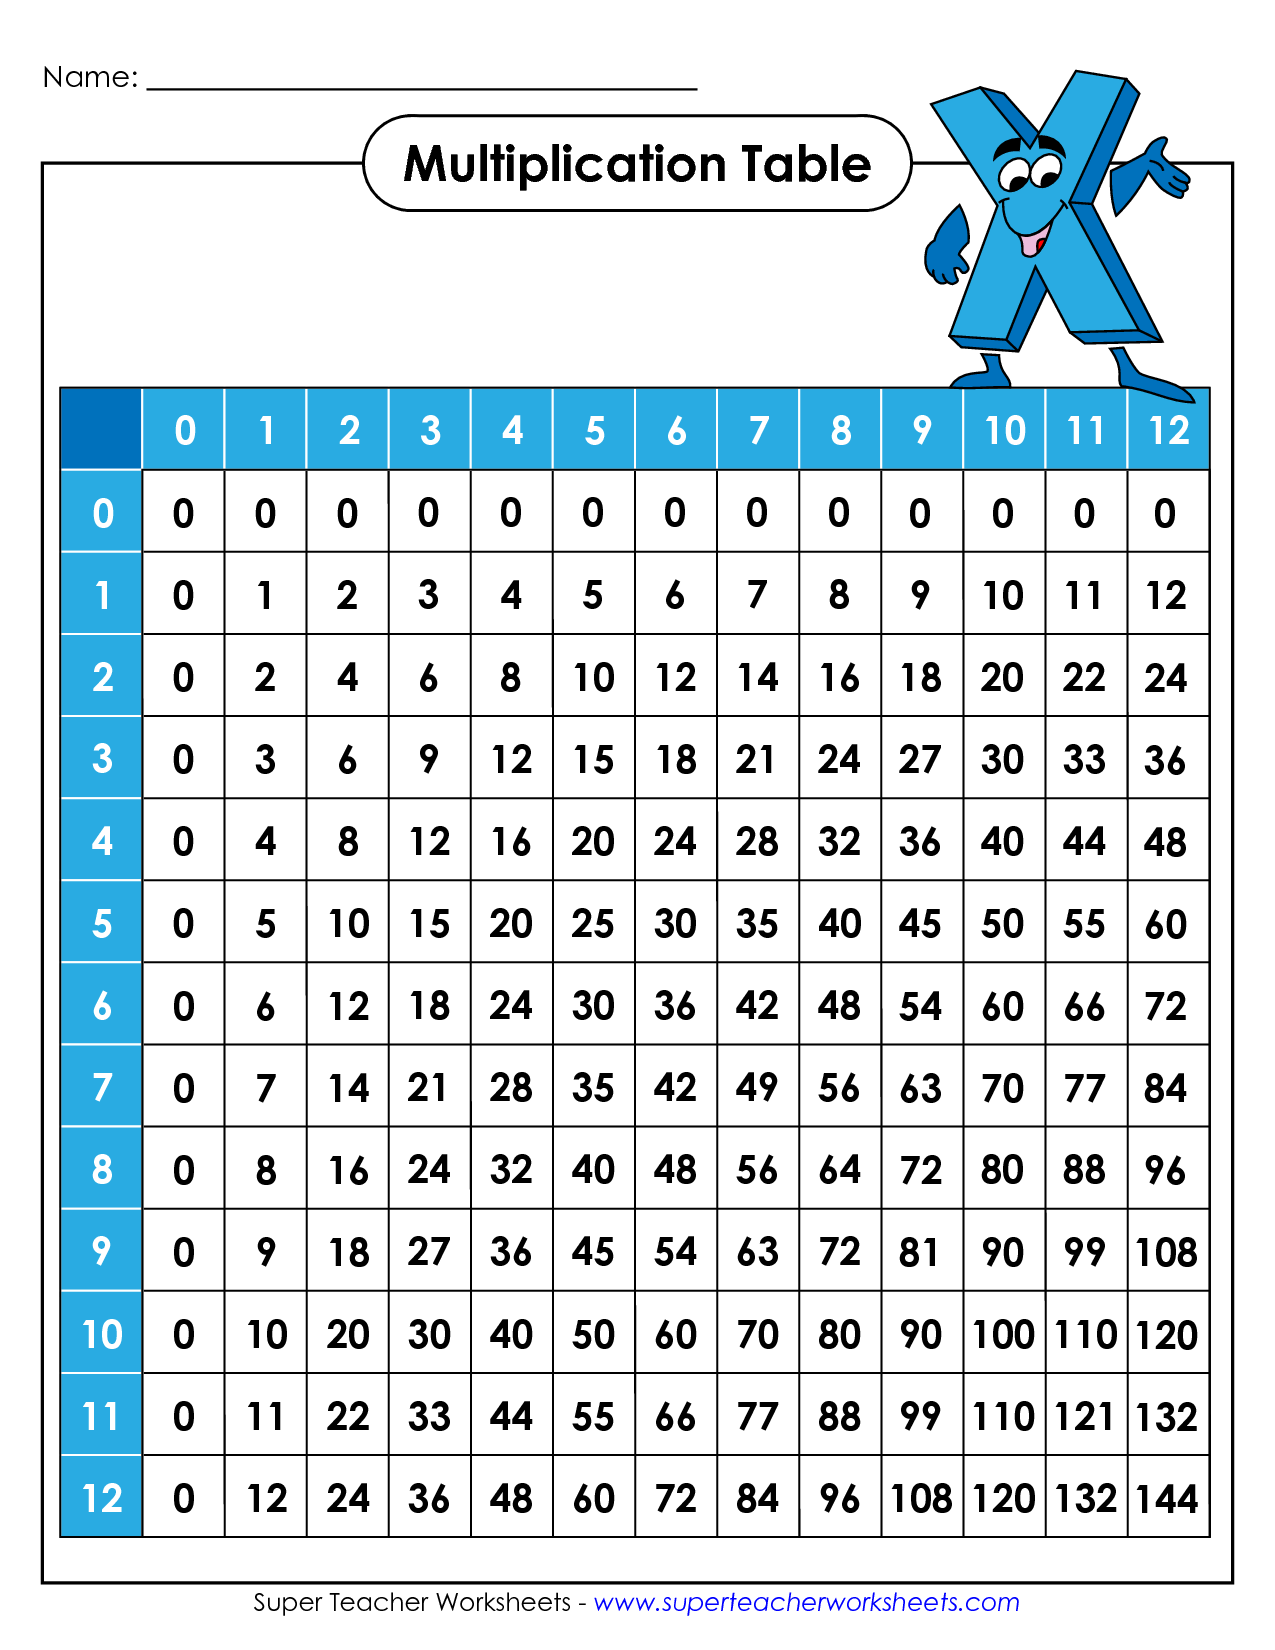 Free Printable Multiplication Charts